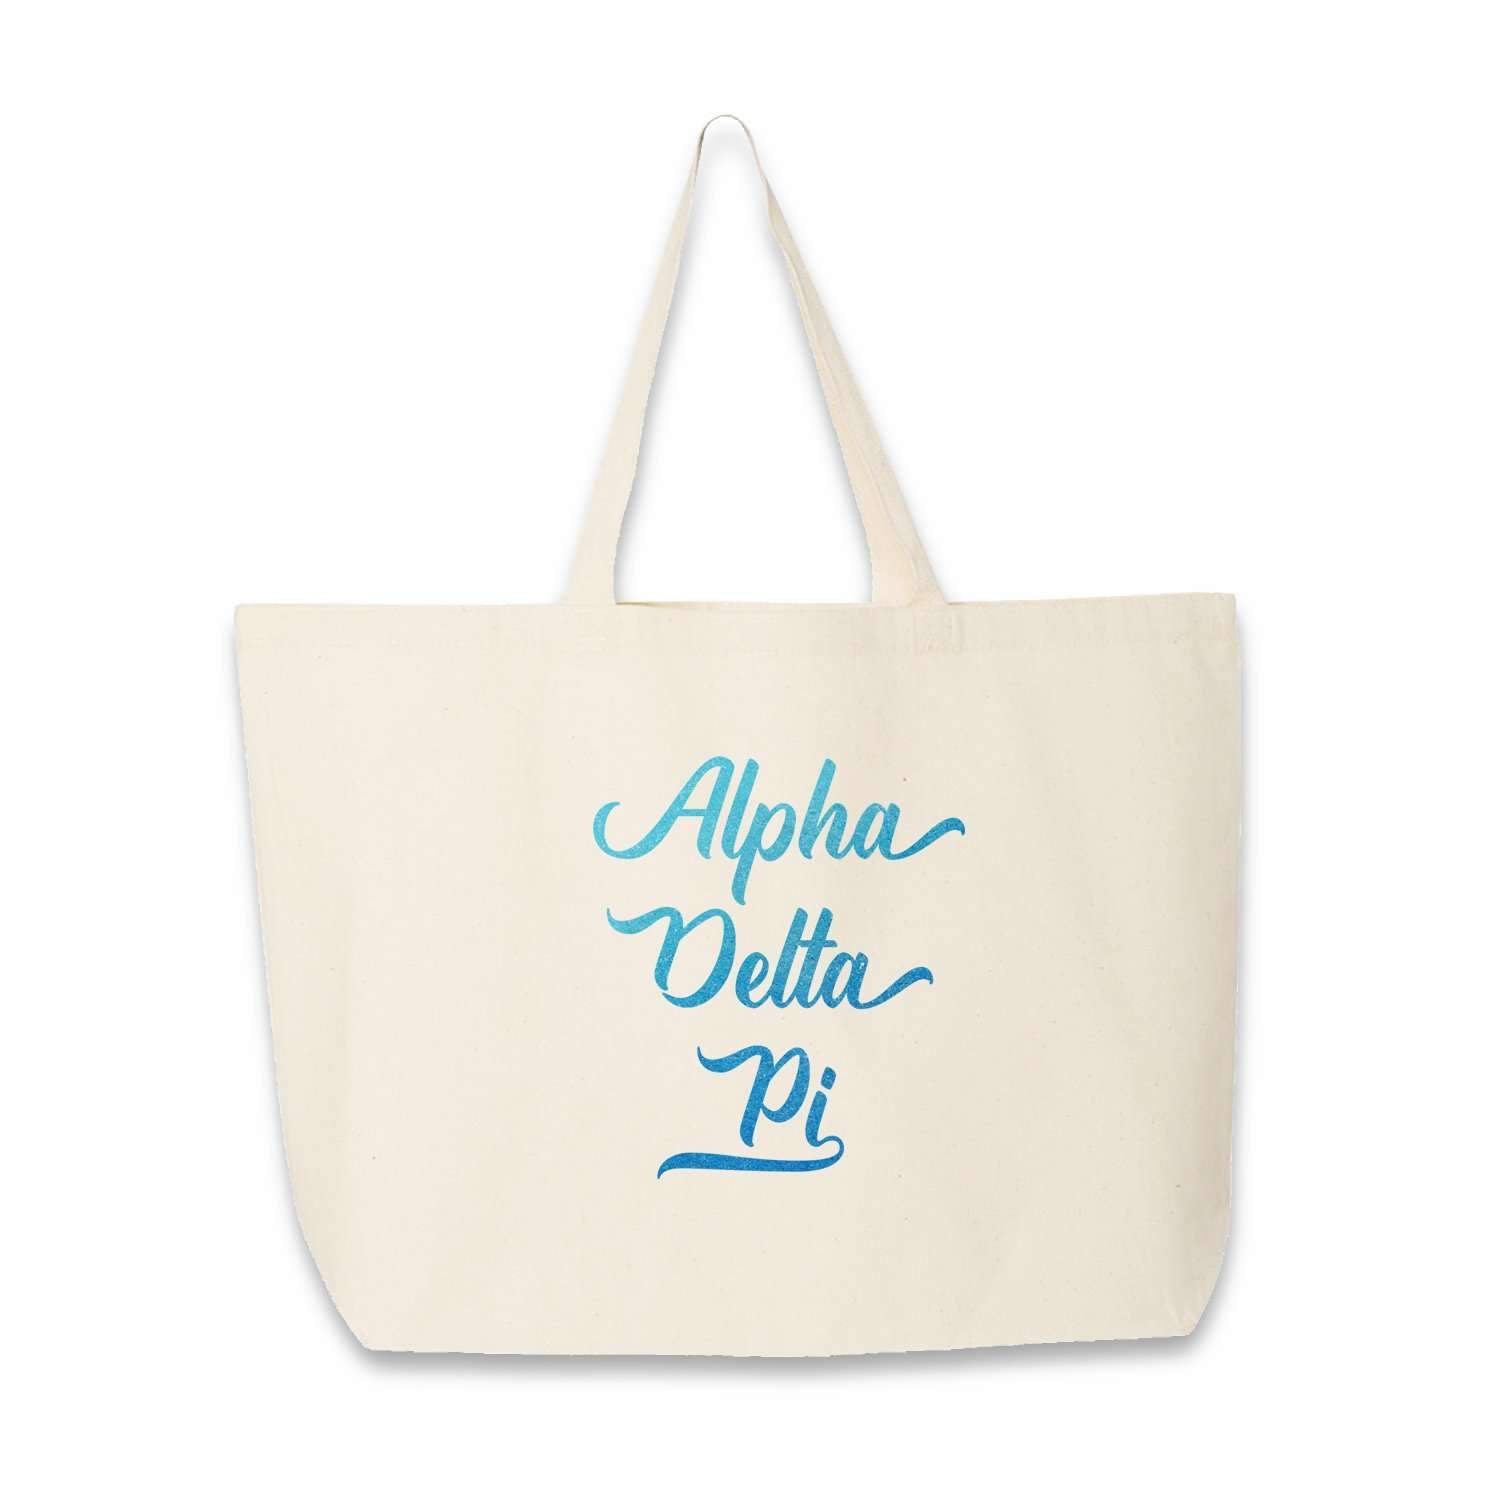 Alpha Delta Pi sorority name custom printed on canvas tote bag